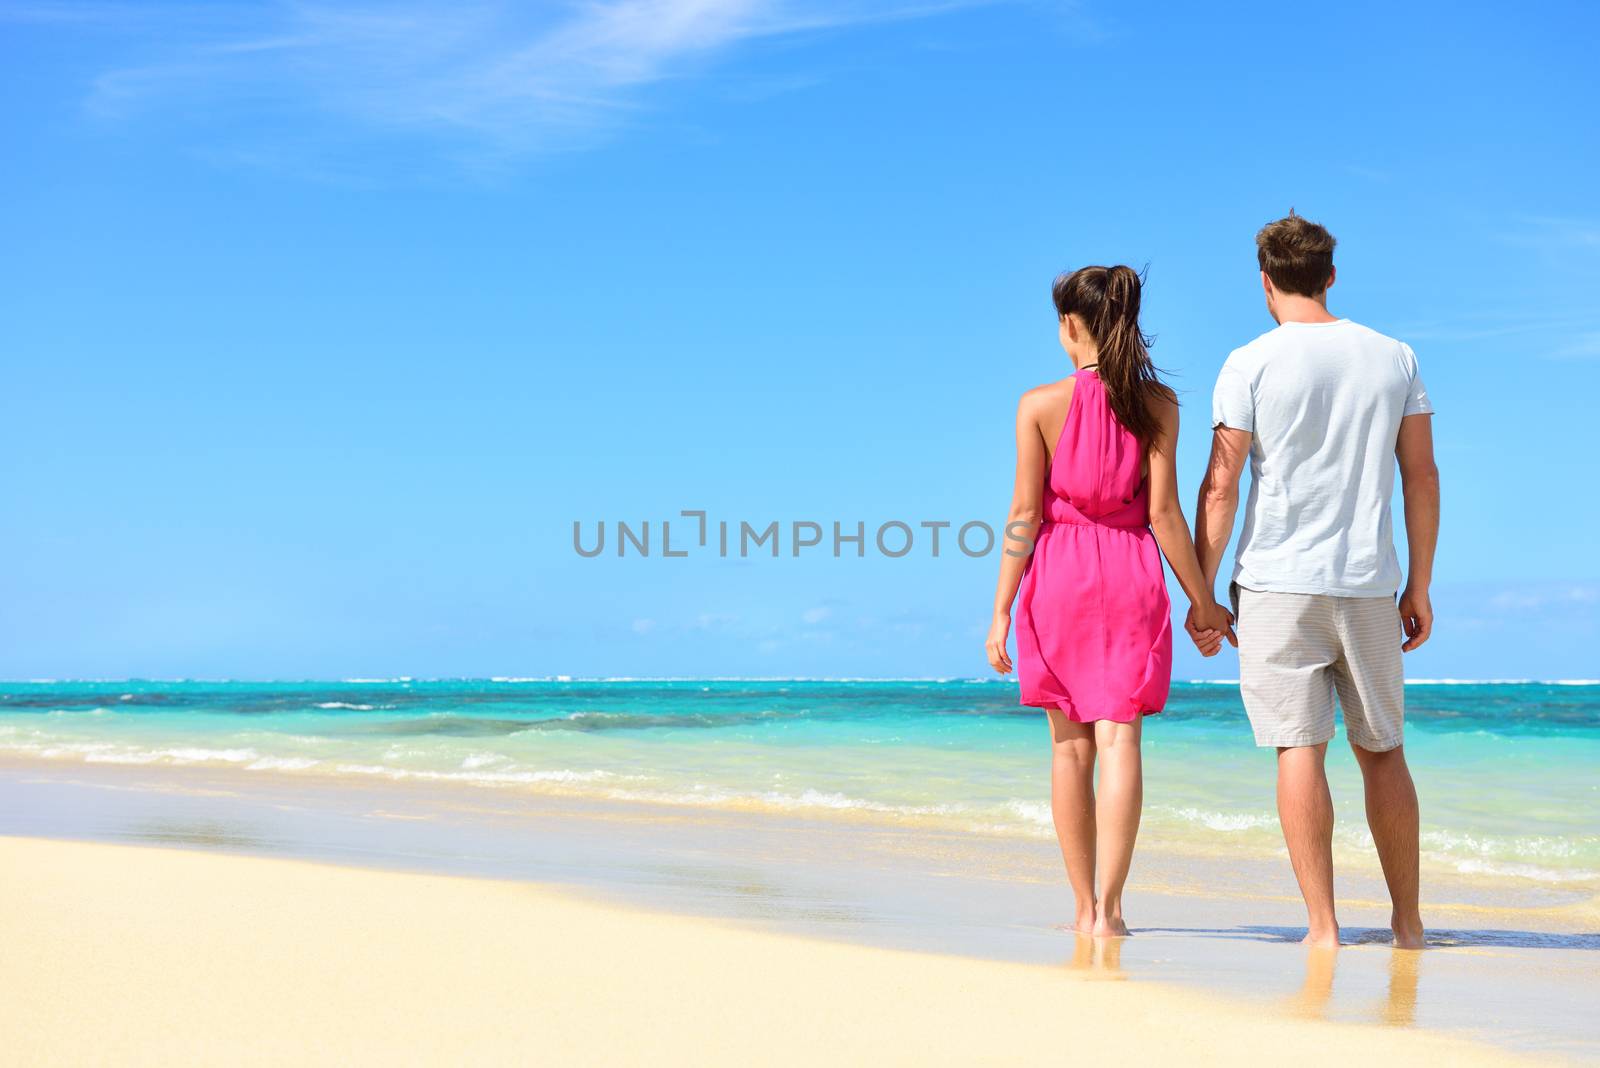 Summer holiday - couple on tropical beach vacation by Maridav